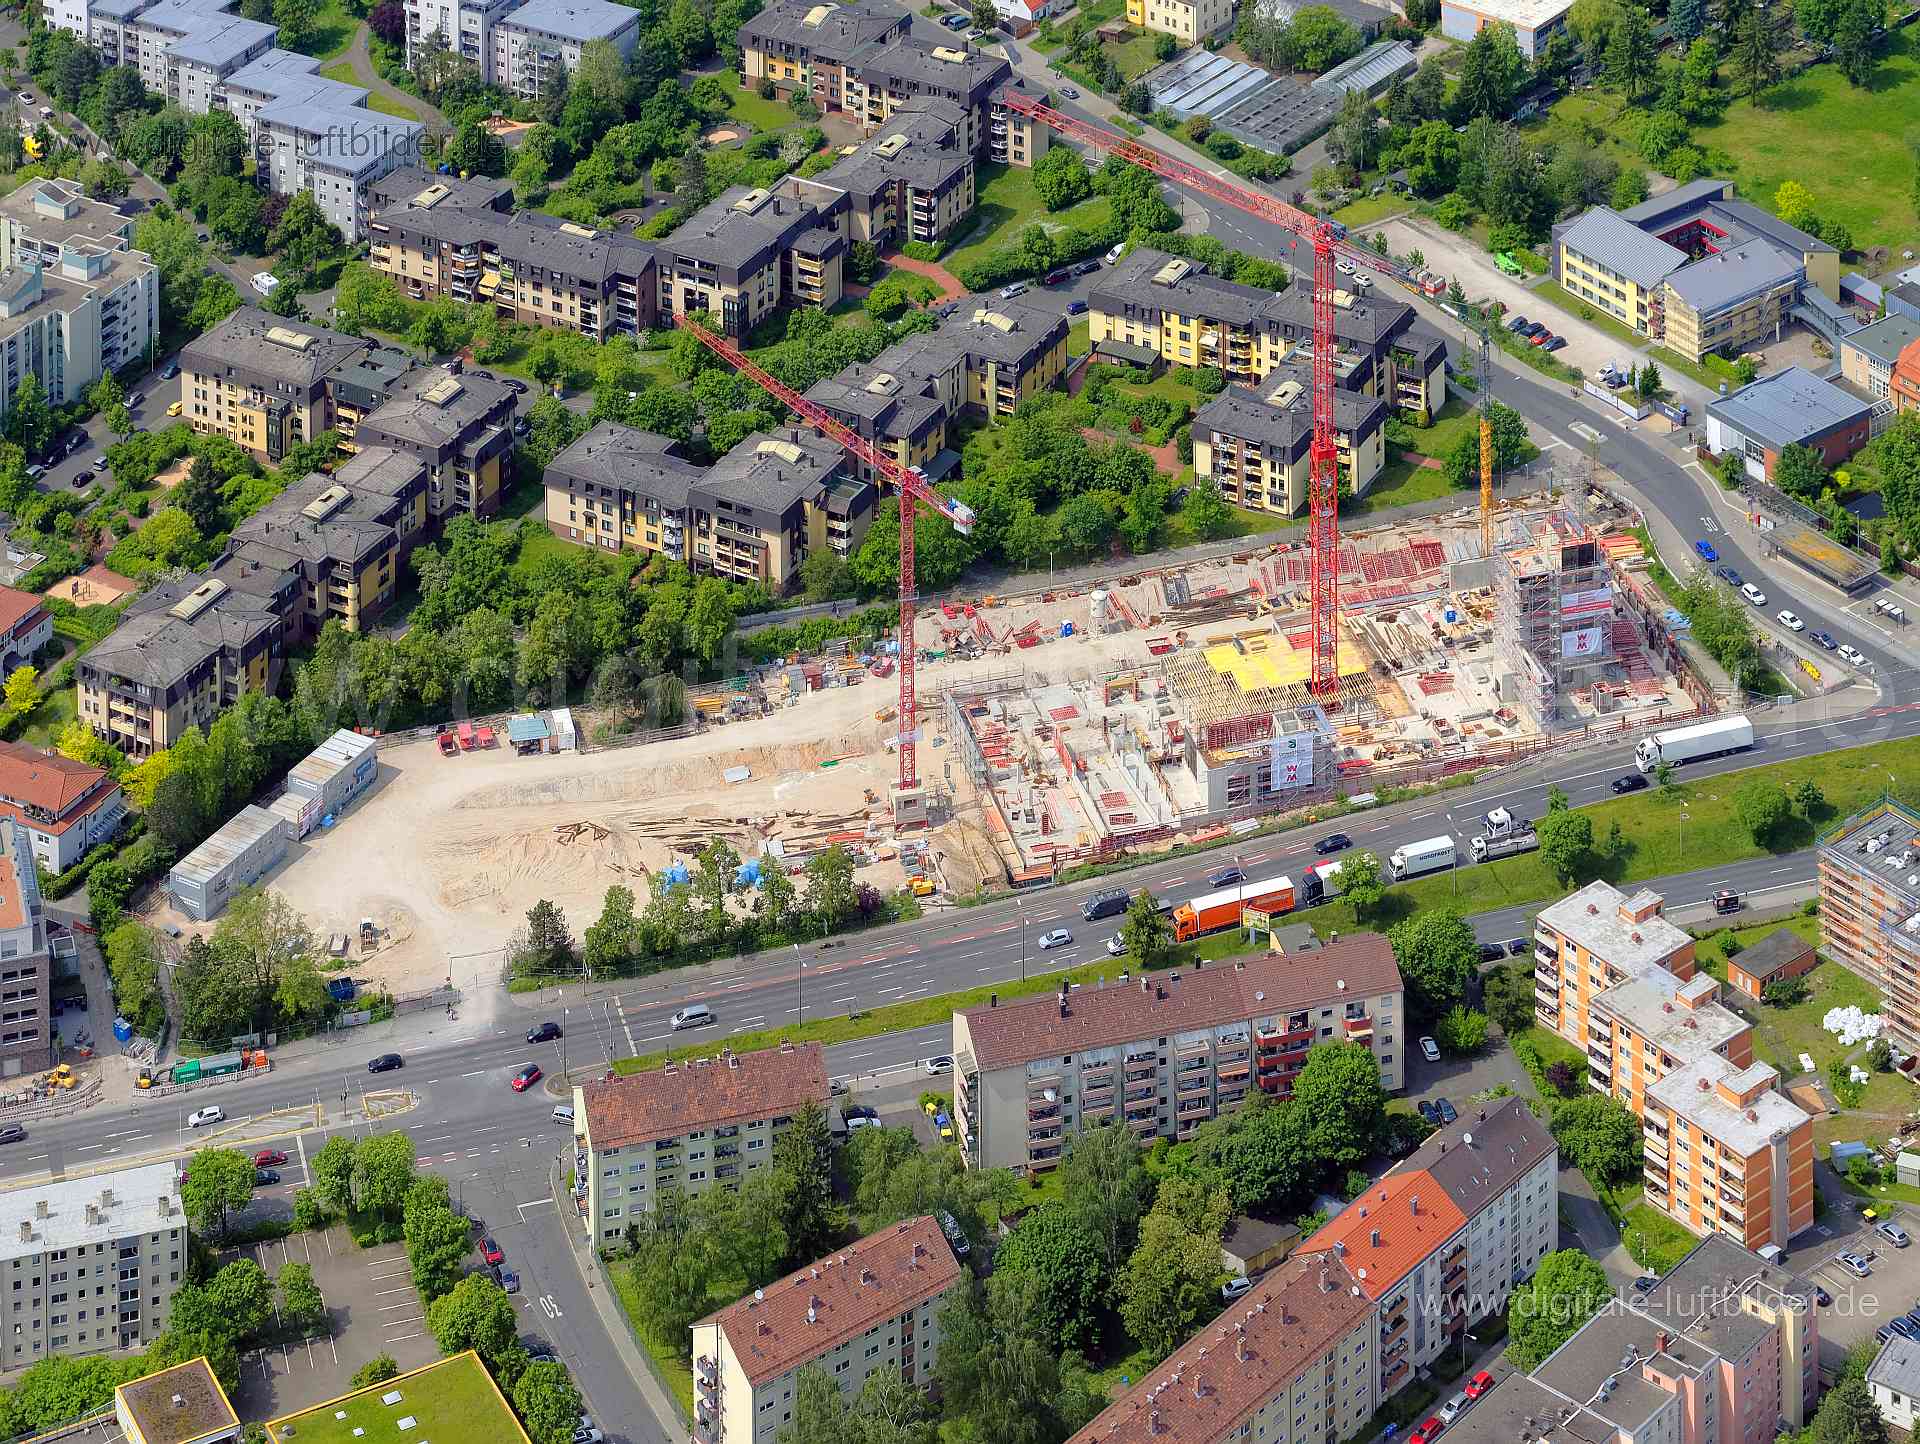 Luftbild - Umweltbank (Baustelle), Ort: Nürnberg, Tags: Umweltbank, Baustelle, Großbaustelle, Flora 54, Schultheiß, Kran, ...